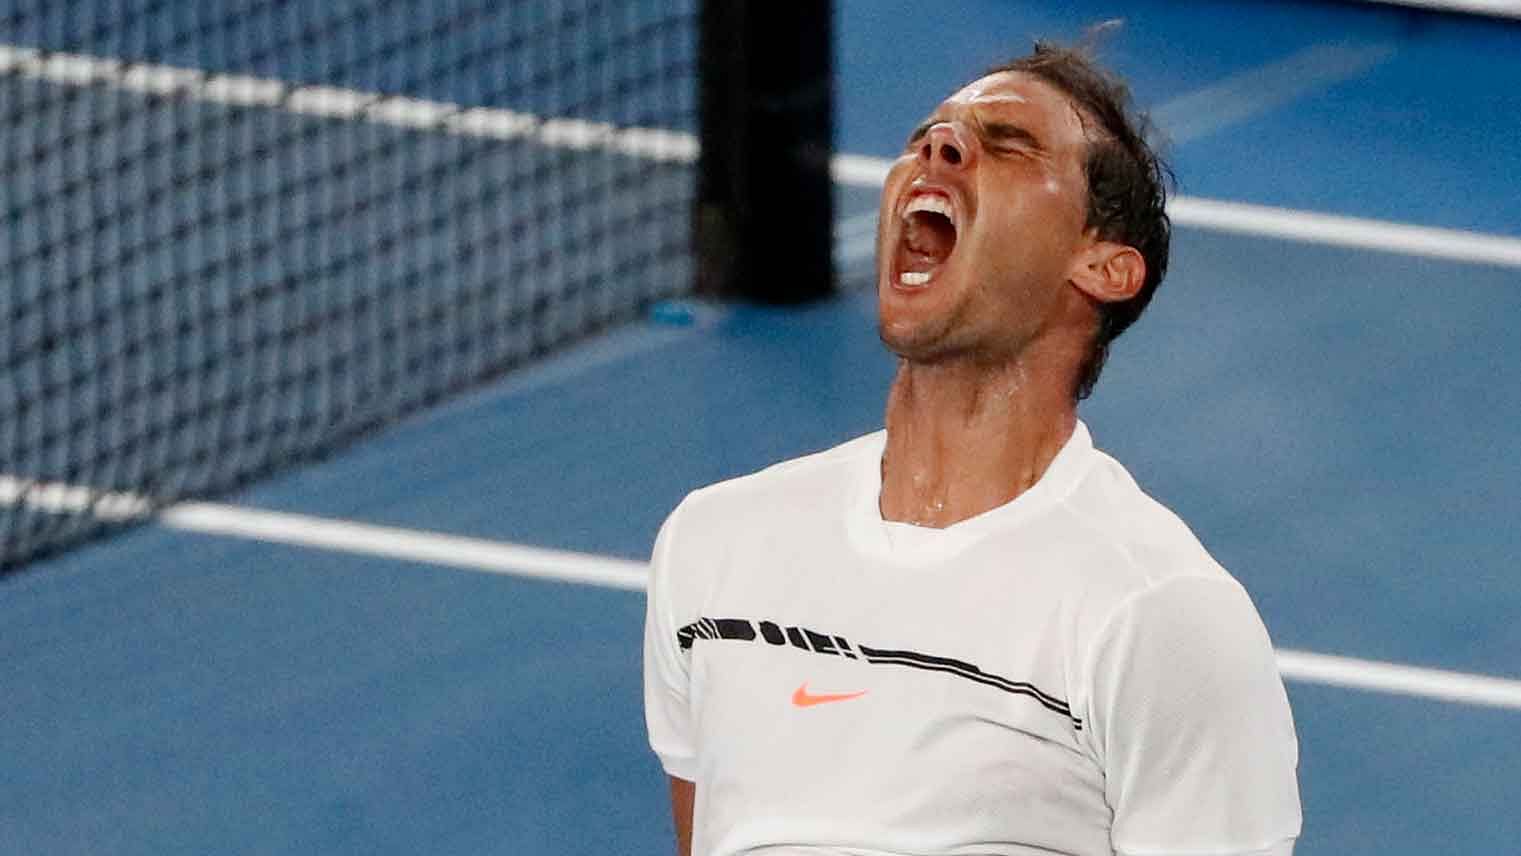 Rafael Nadal celebrates his fourth round victory. (Photo: AP)